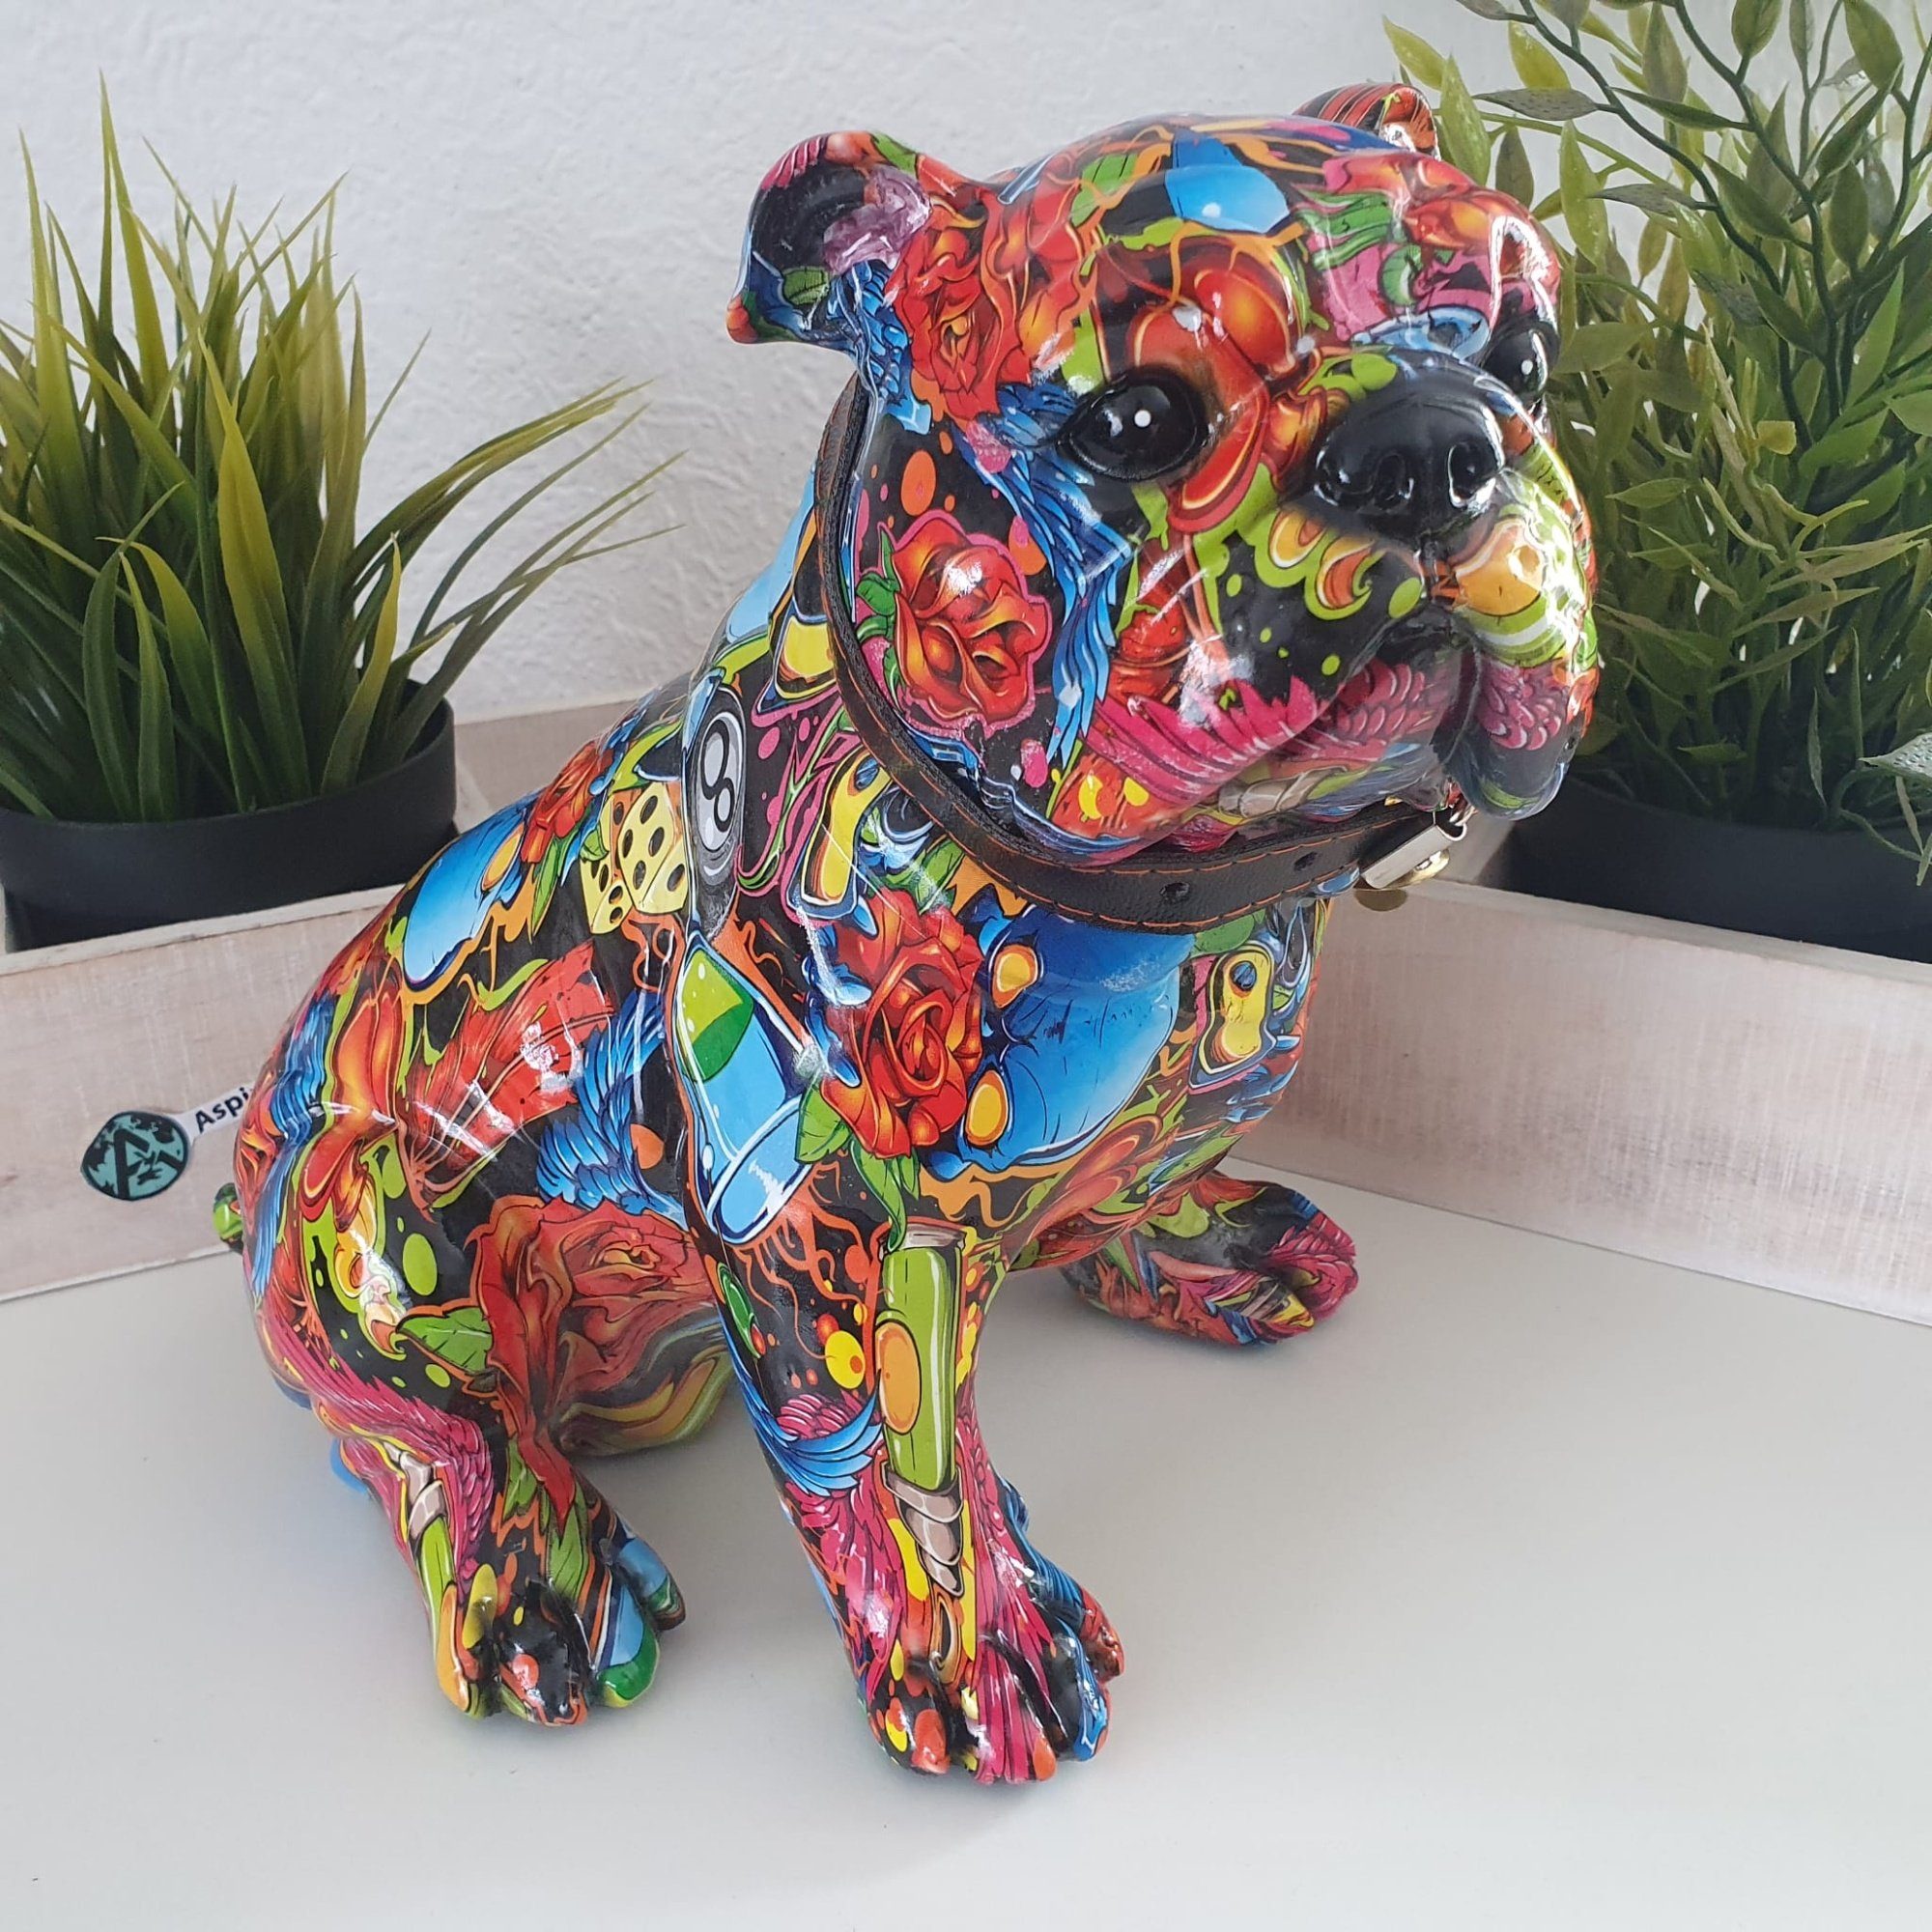 Hunde 22 cm Graffiti Art Street Figur Dekofigur Mops Aspinaworld style